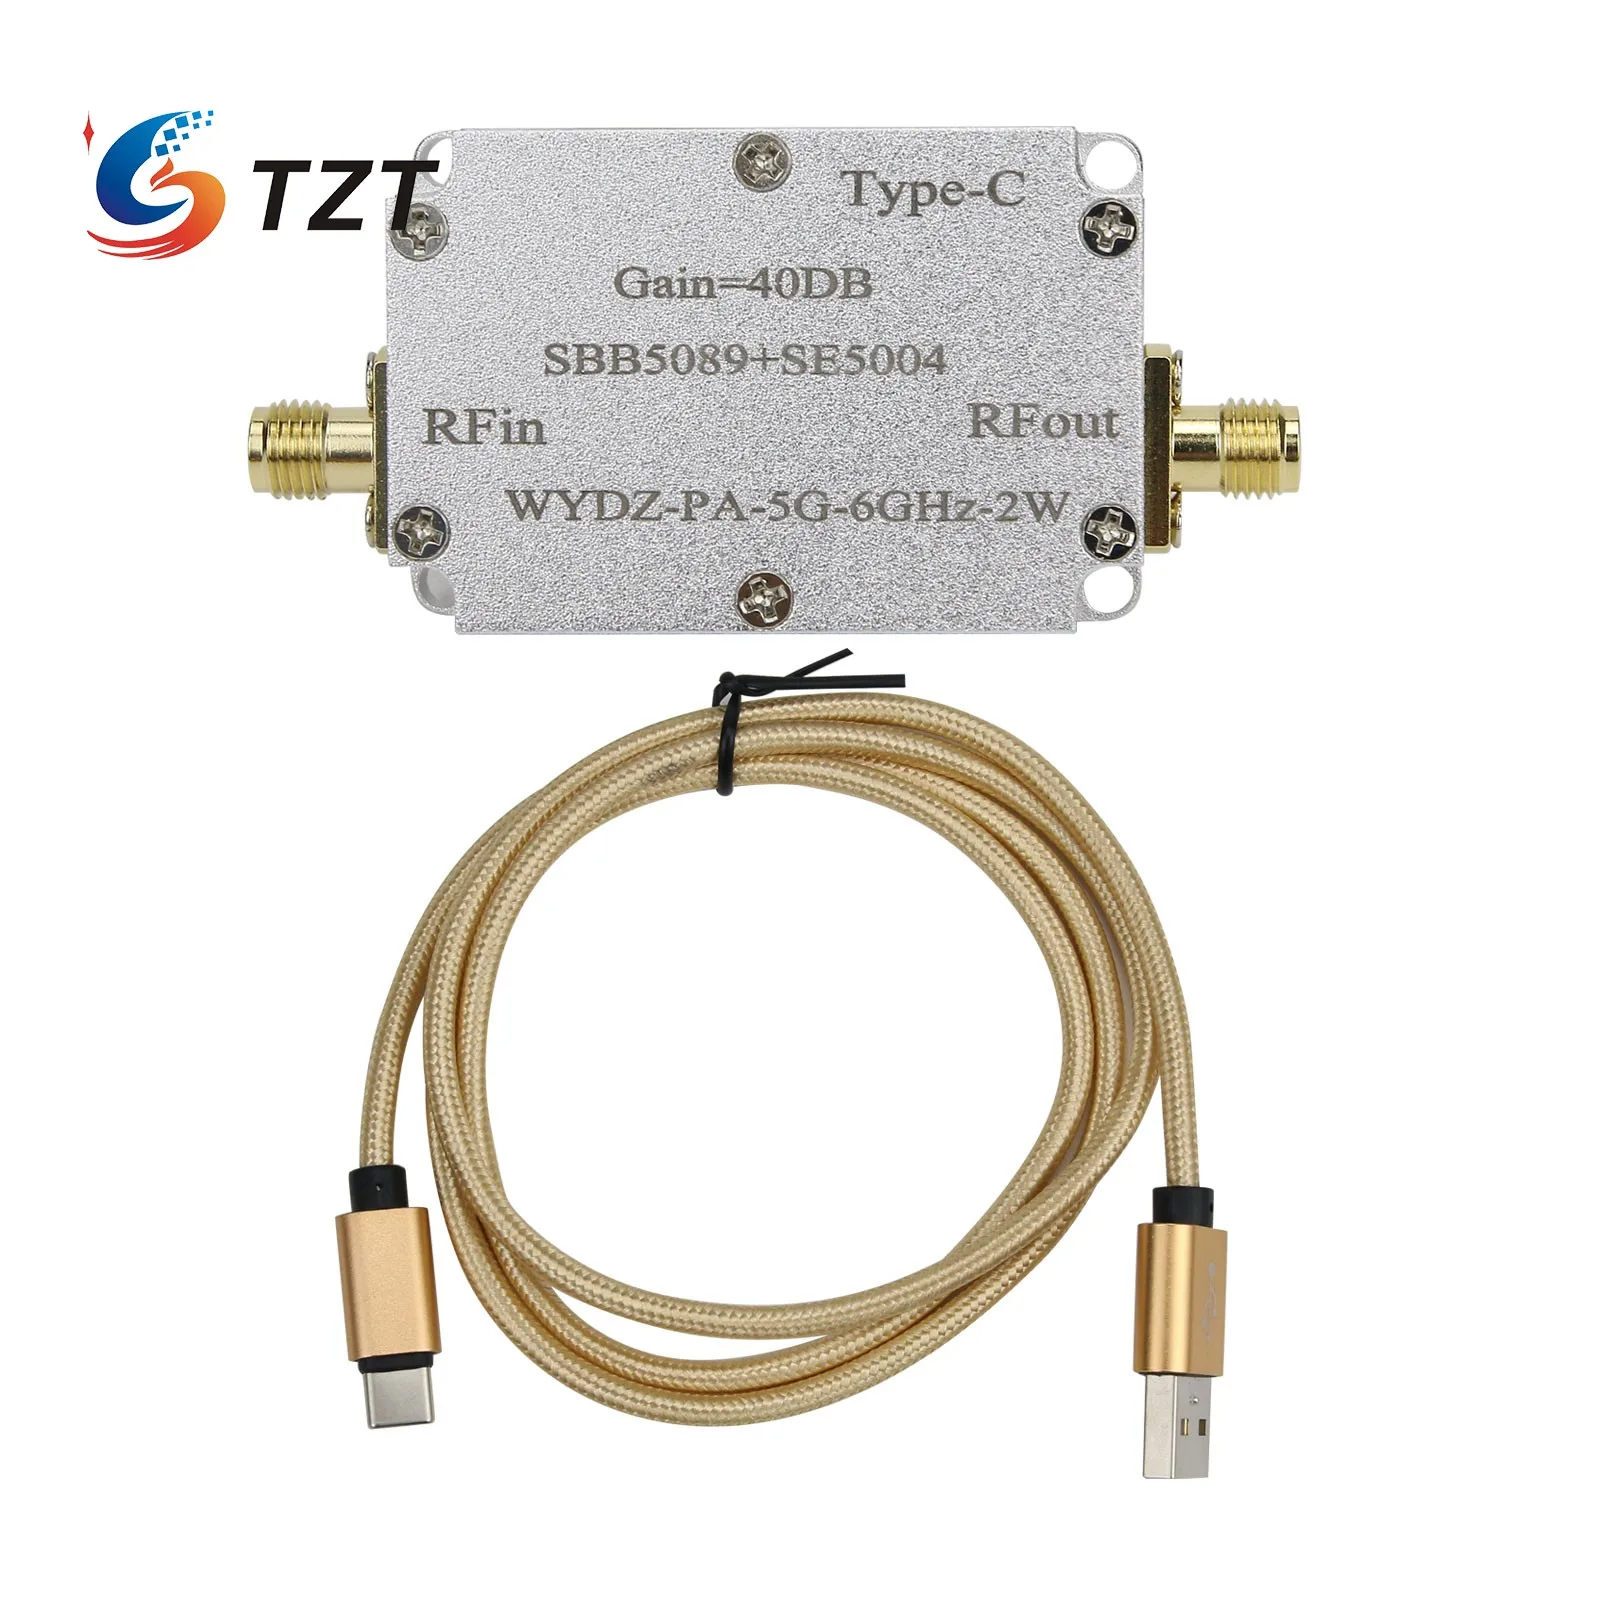 TZT SBB5089 + SE5004 Tek Yönlü Mikrodalga güç amplifikatörü RF güç amplifikatörü Modülü 40DB WYDZ-PA-5G-6GHz-2W